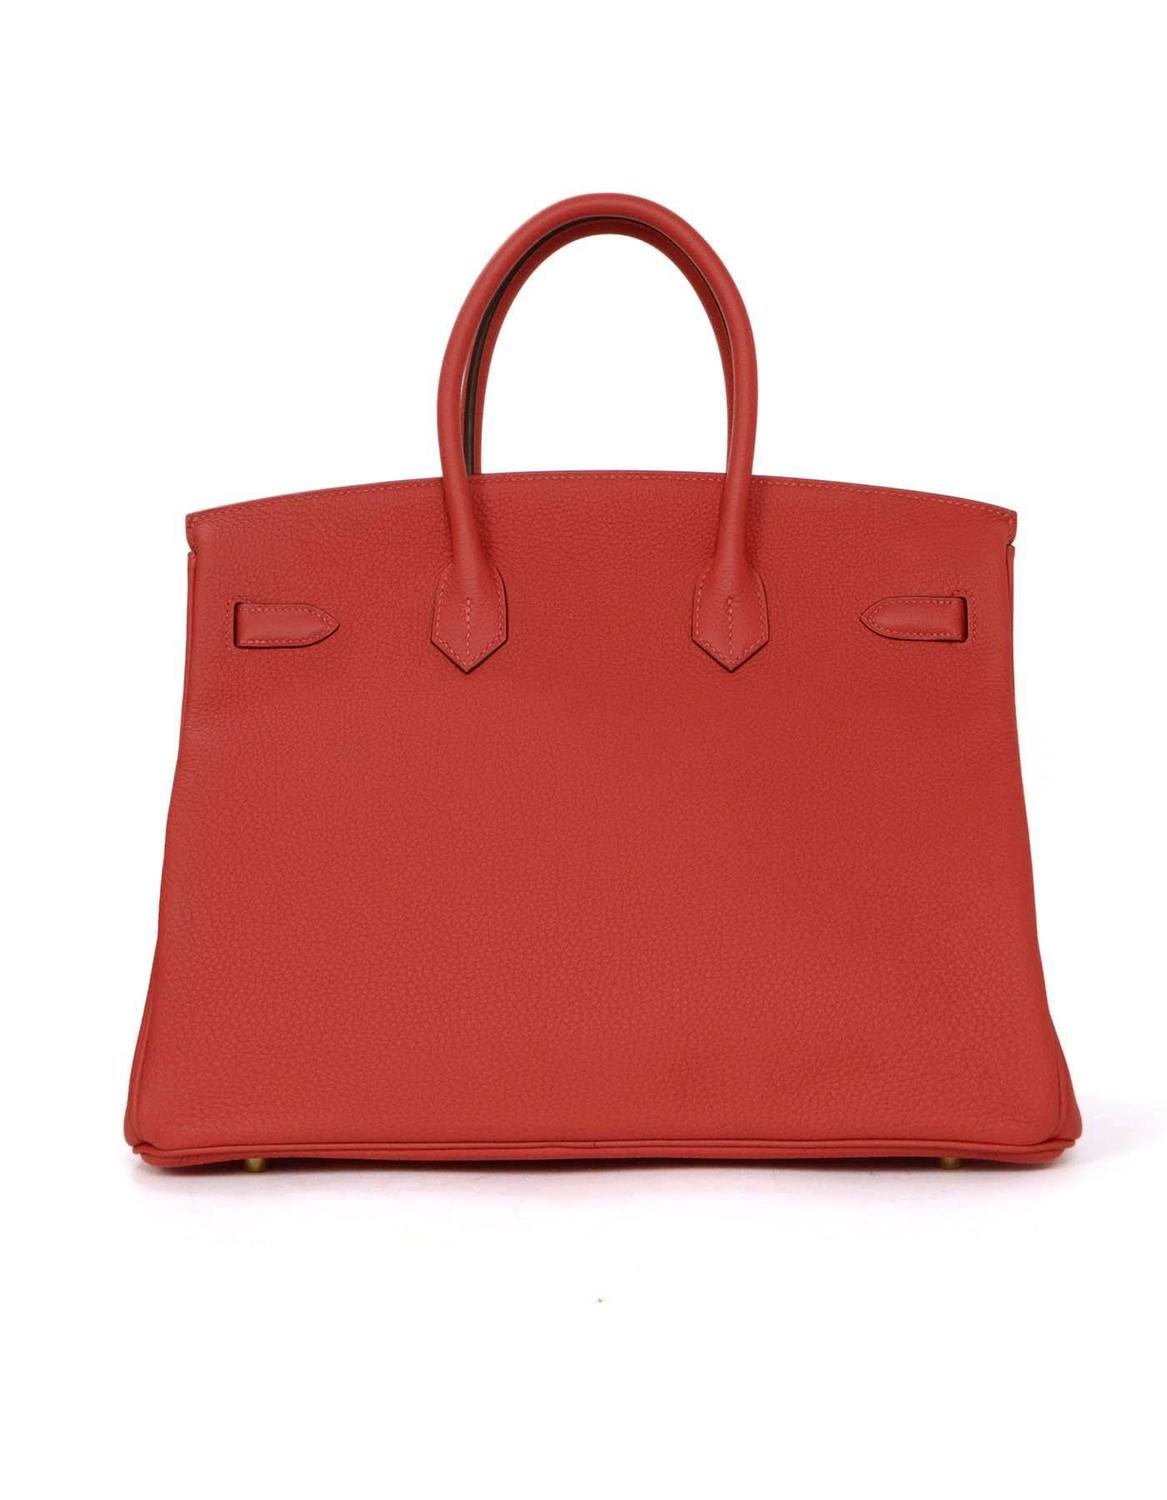 Hermes '14 New in Box Rouge Pivone Togo Leather 35cm Birkin Bag w ...